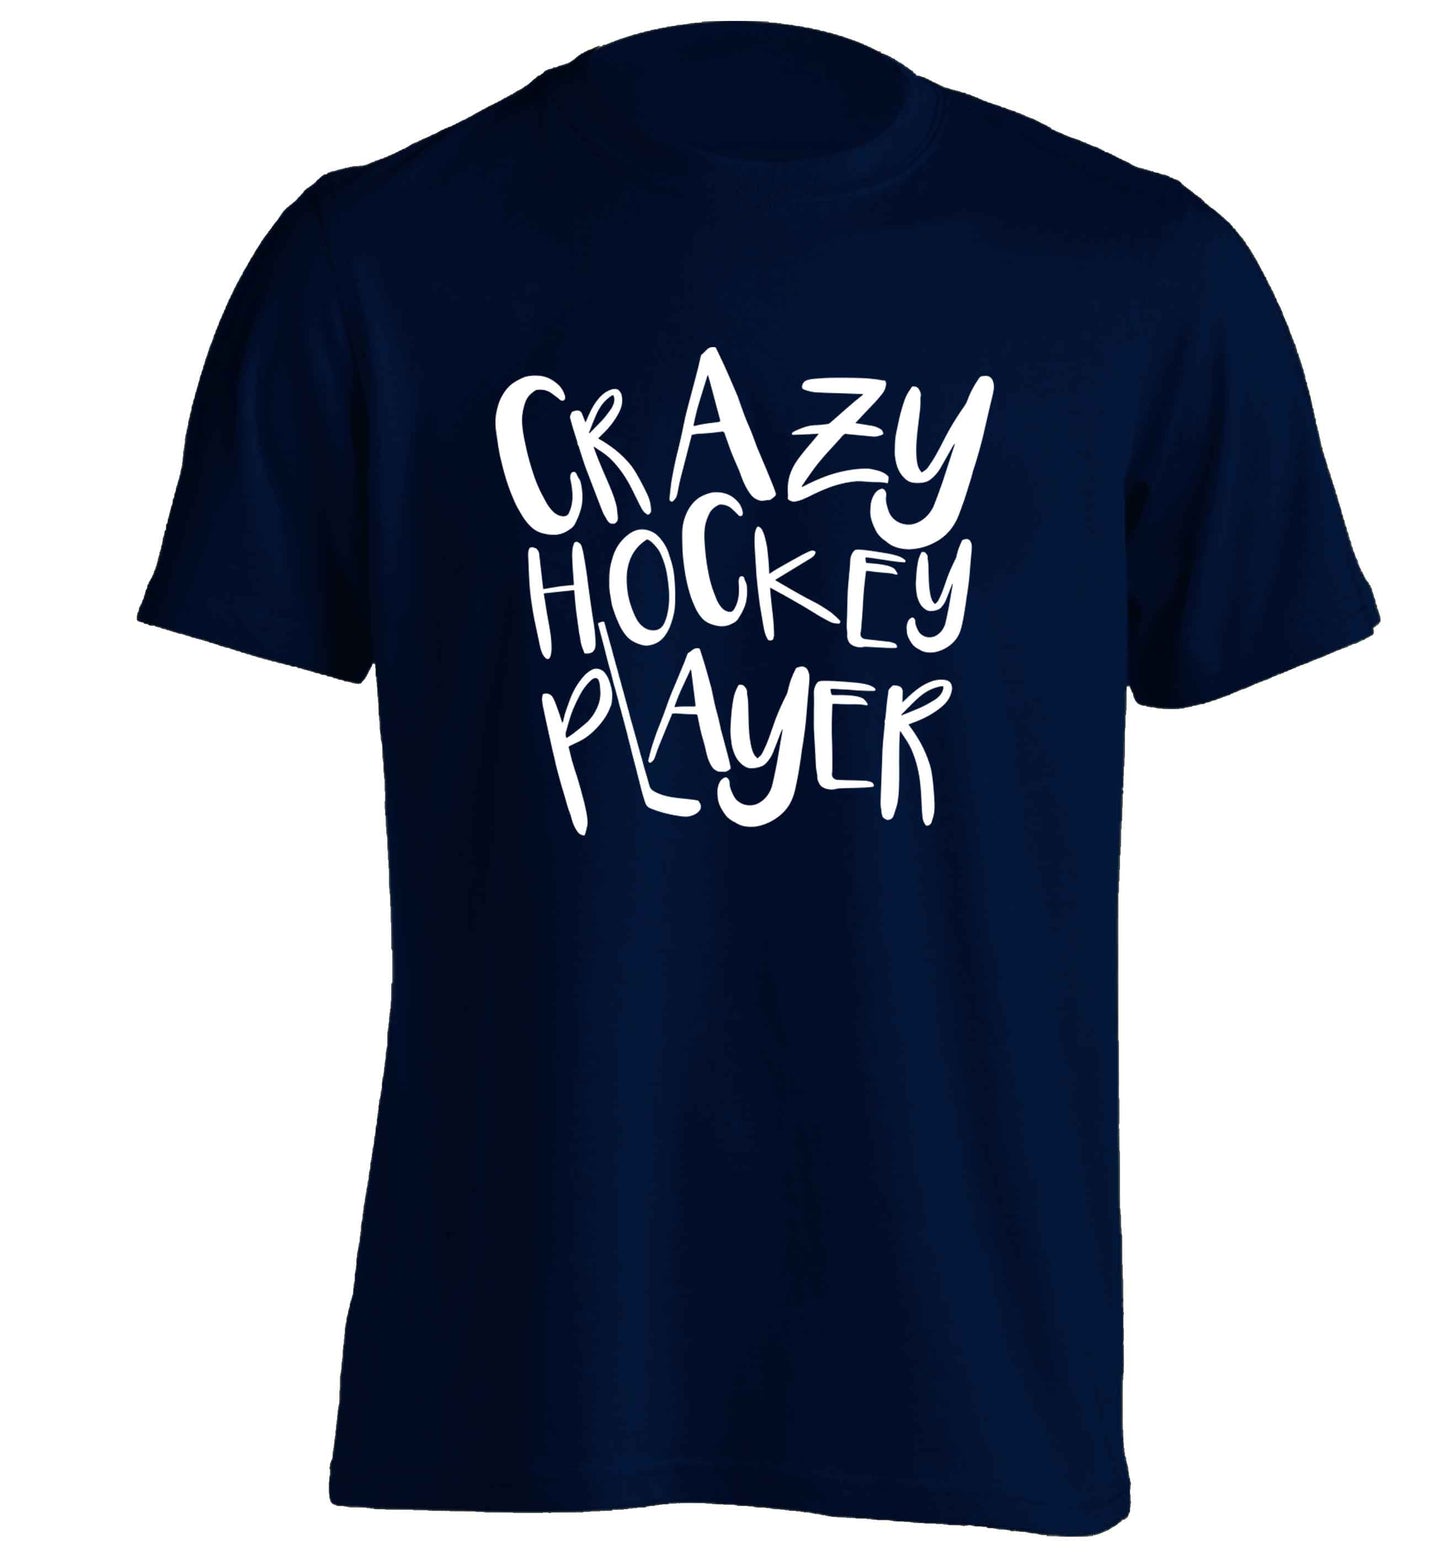 Crazy hockey player adults unisex navy Tshirt 2XL